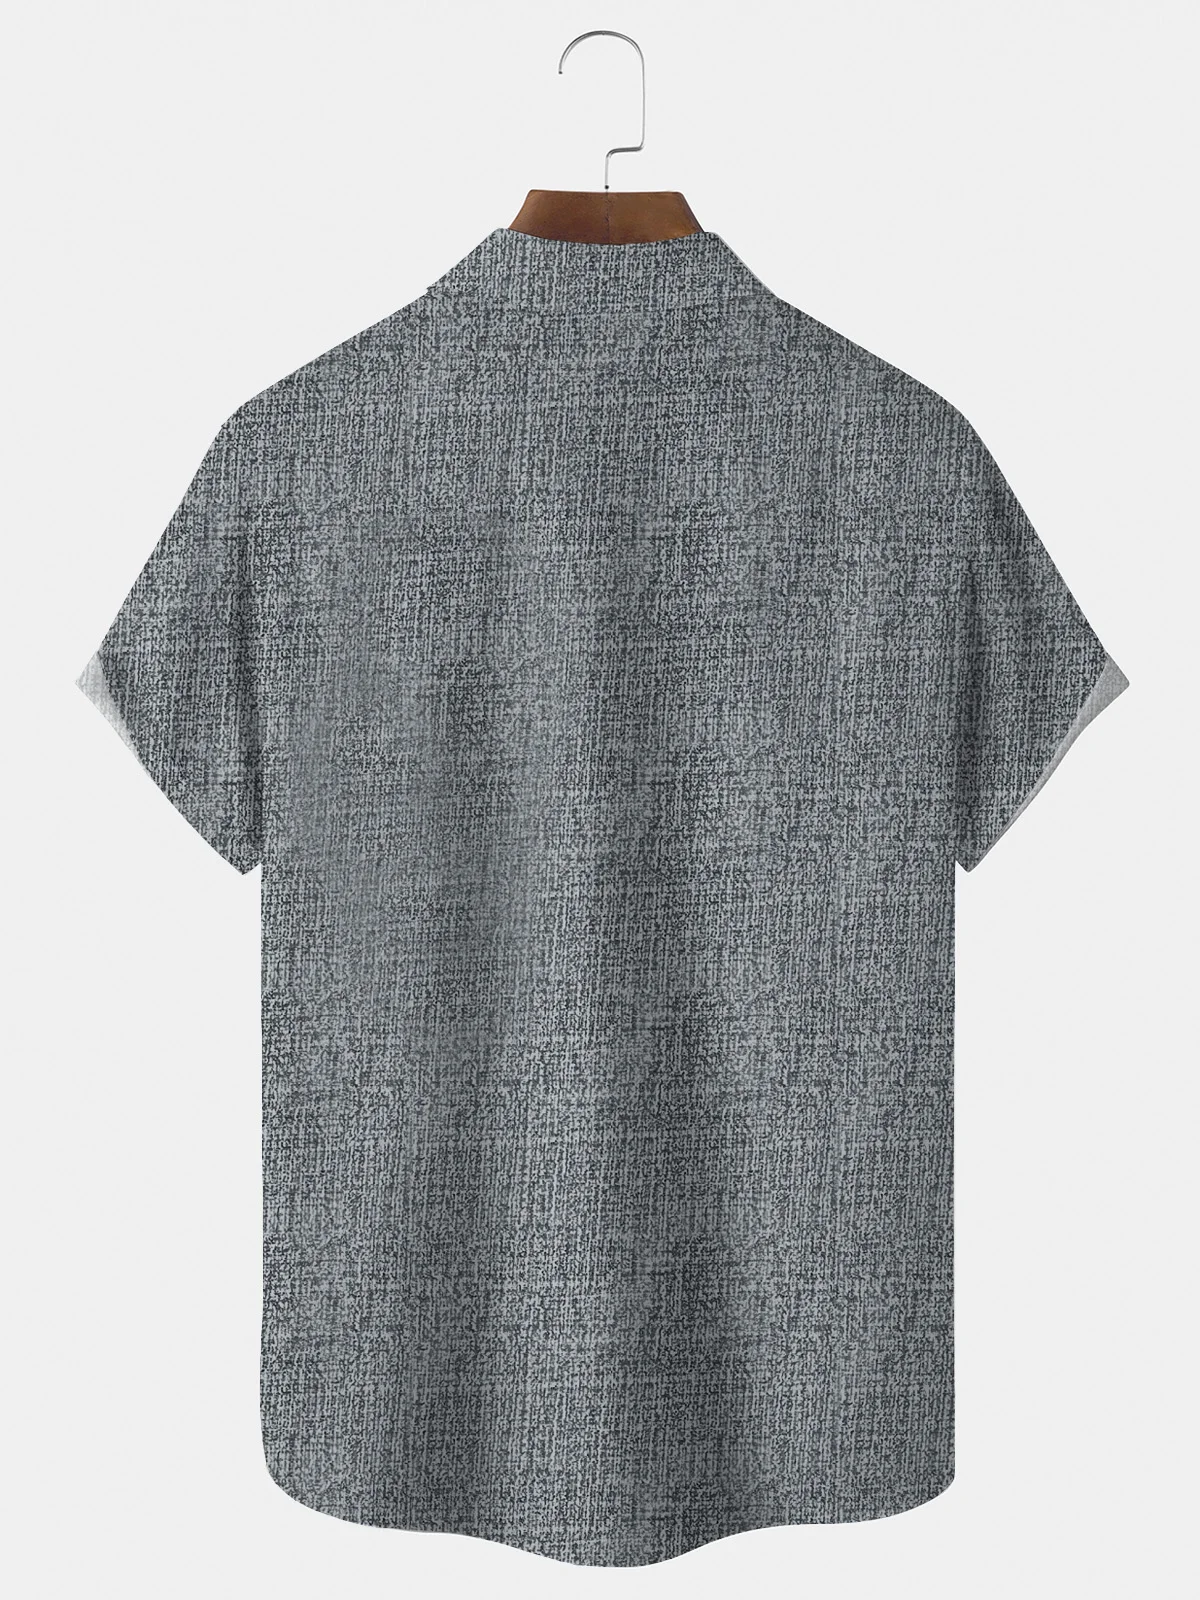 Royaura Coconut Tree Texture Print Men's Button Pocket Short Sleeve Shirt